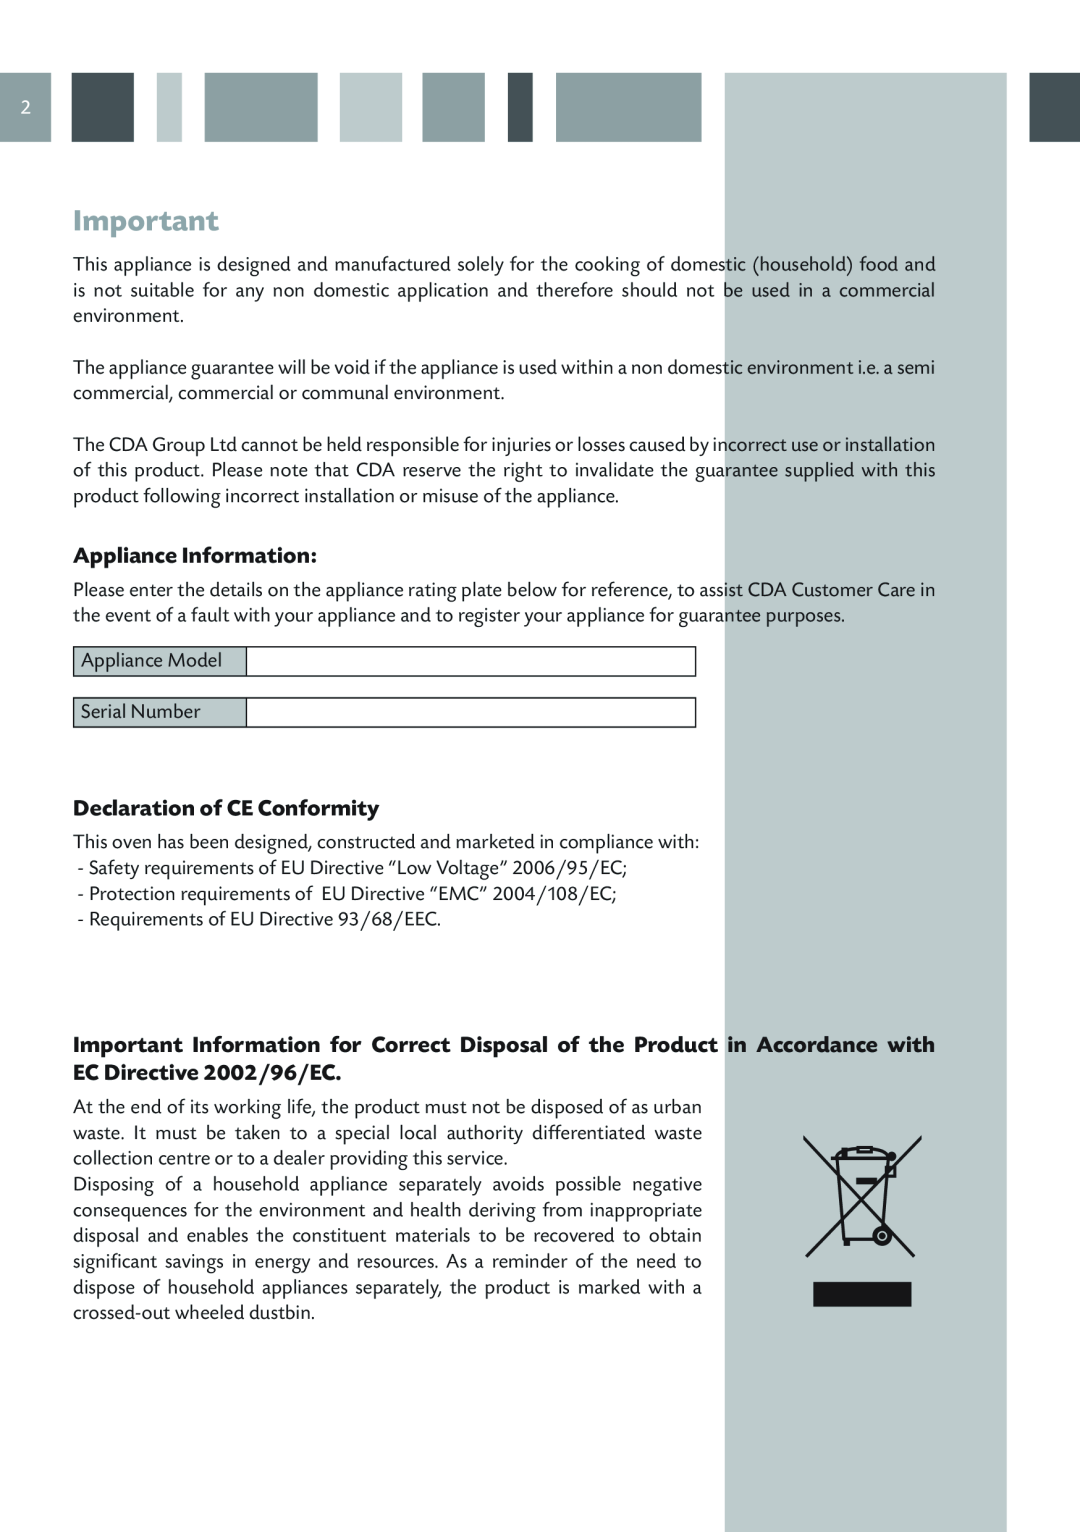 CDA SC220R, SC220L manual Appliance Information, Declaration of CE Conformity 